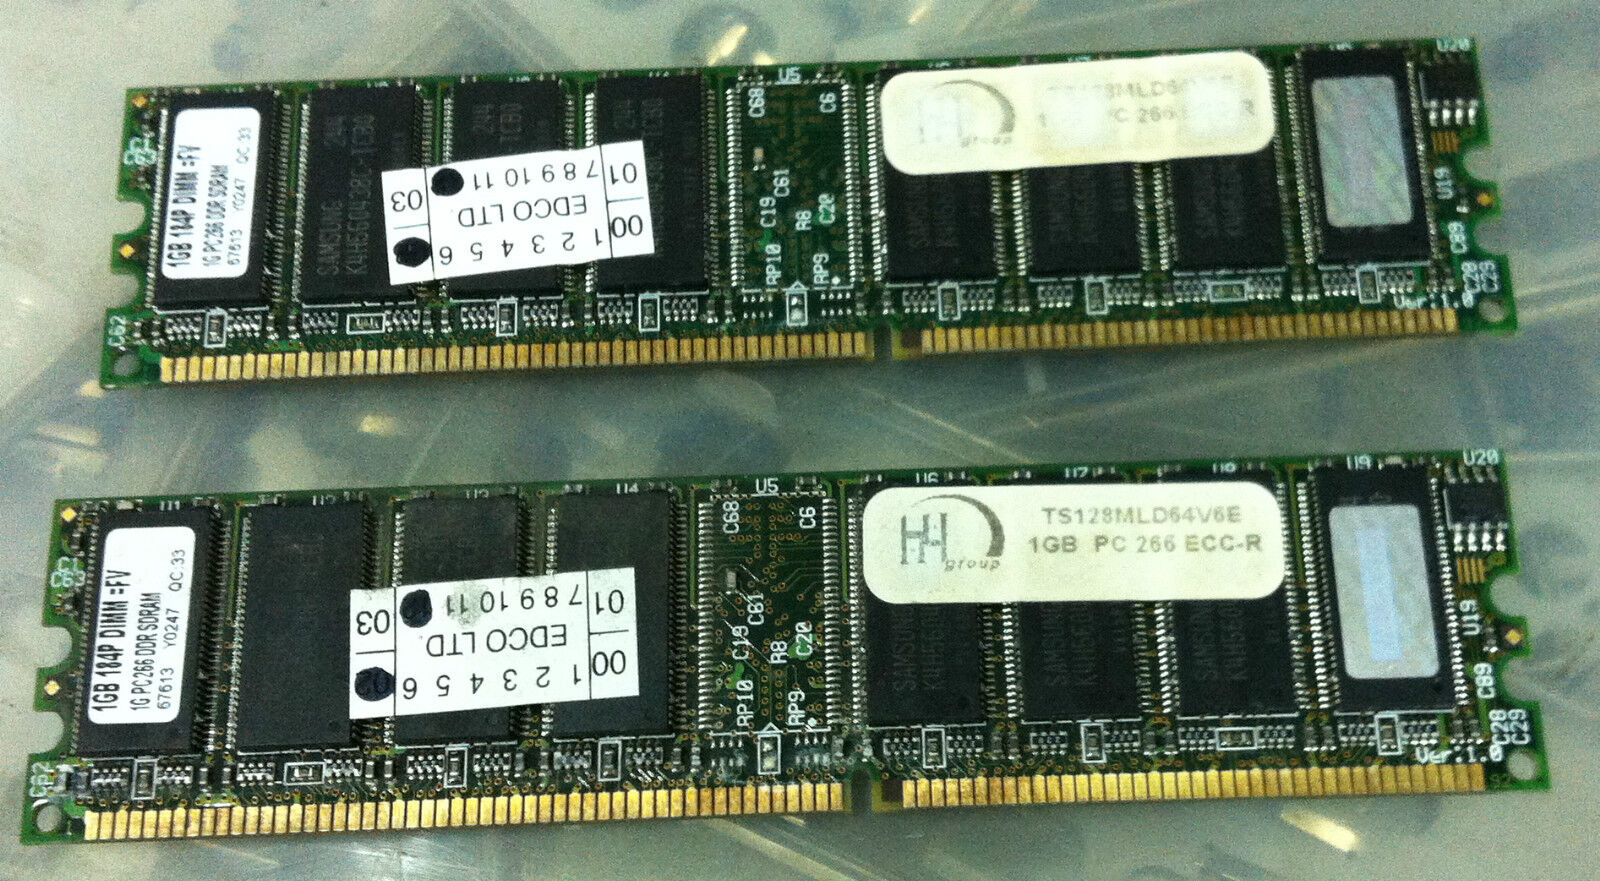 4x Transcend TS128MLD64V6E 1GB PC2100 266MHz DDR1 ECC REG Server Memory Modules